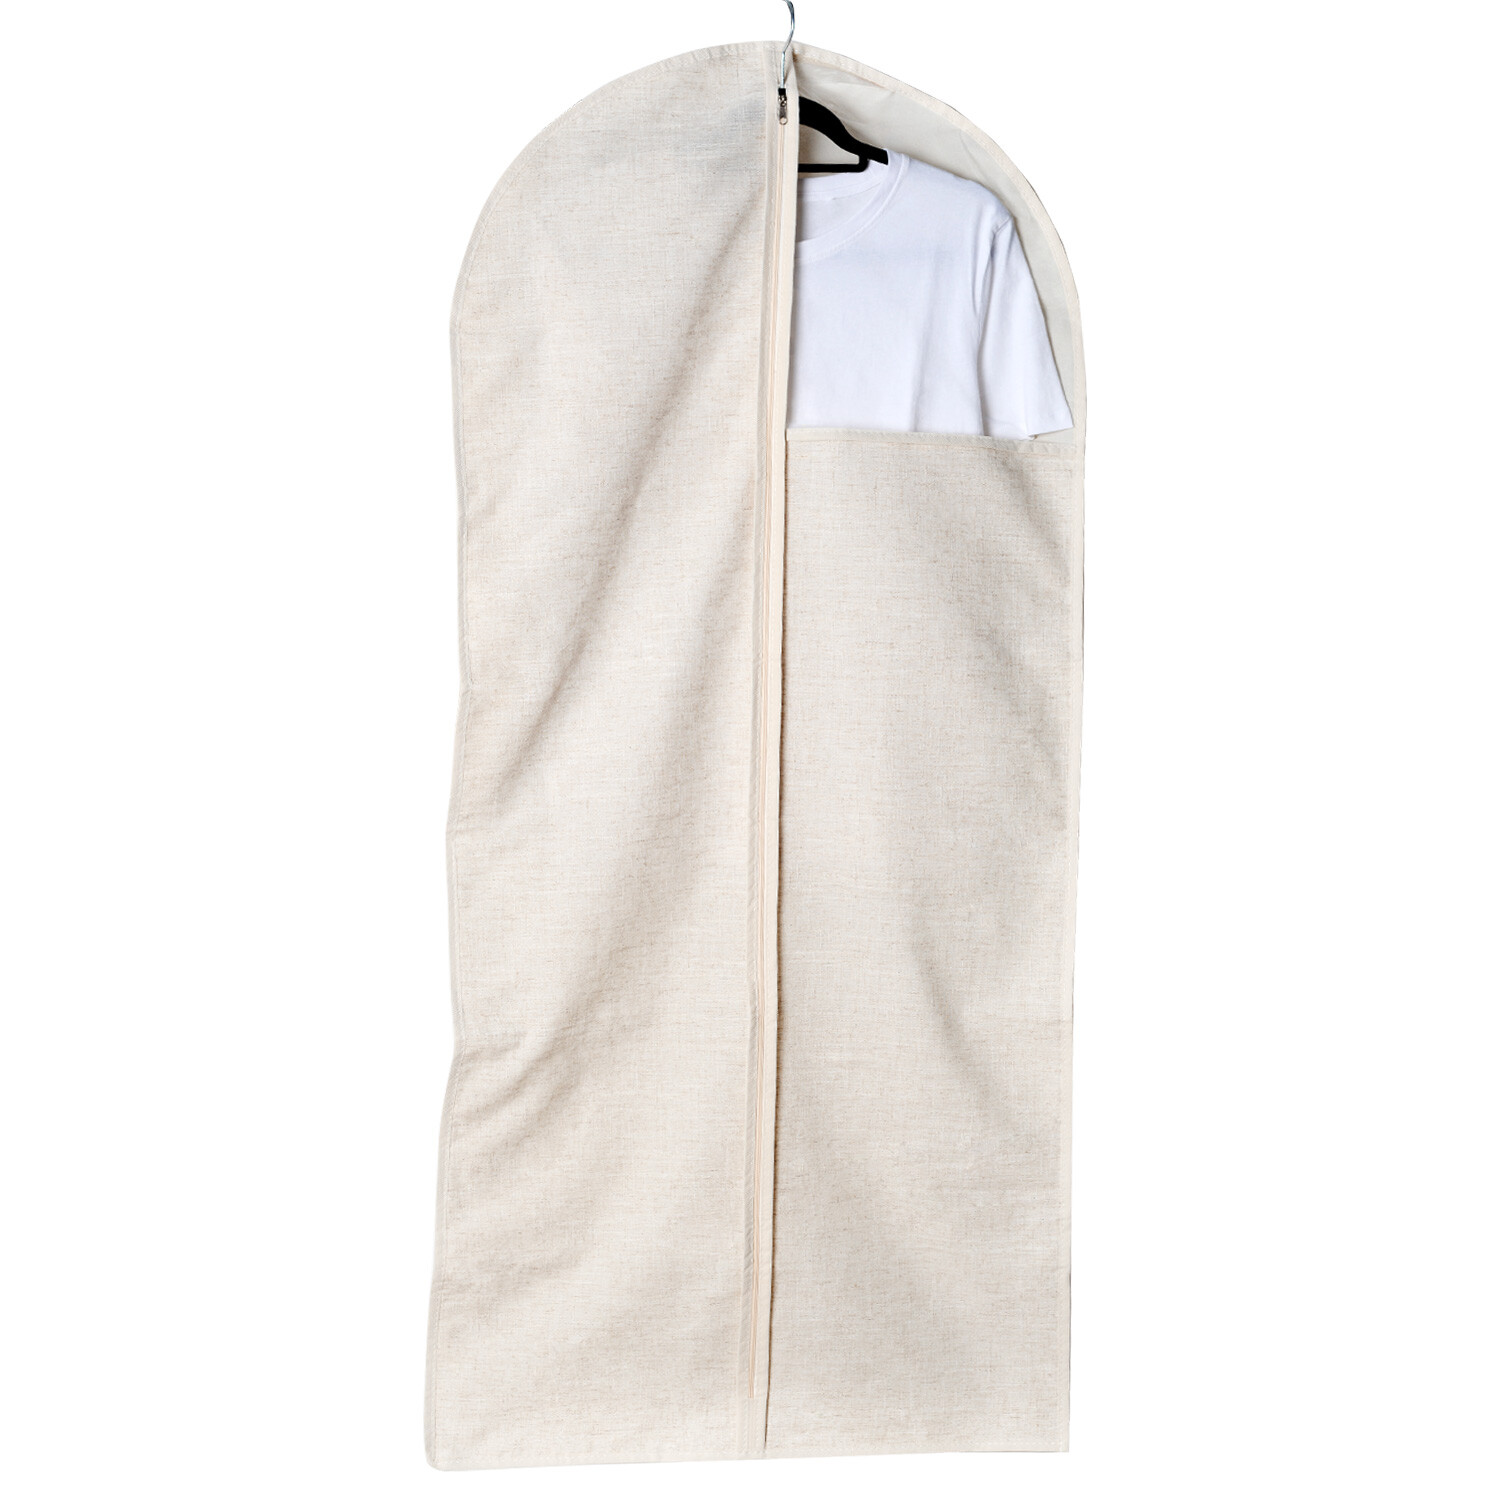 Garment Bag Cover - Cream Image